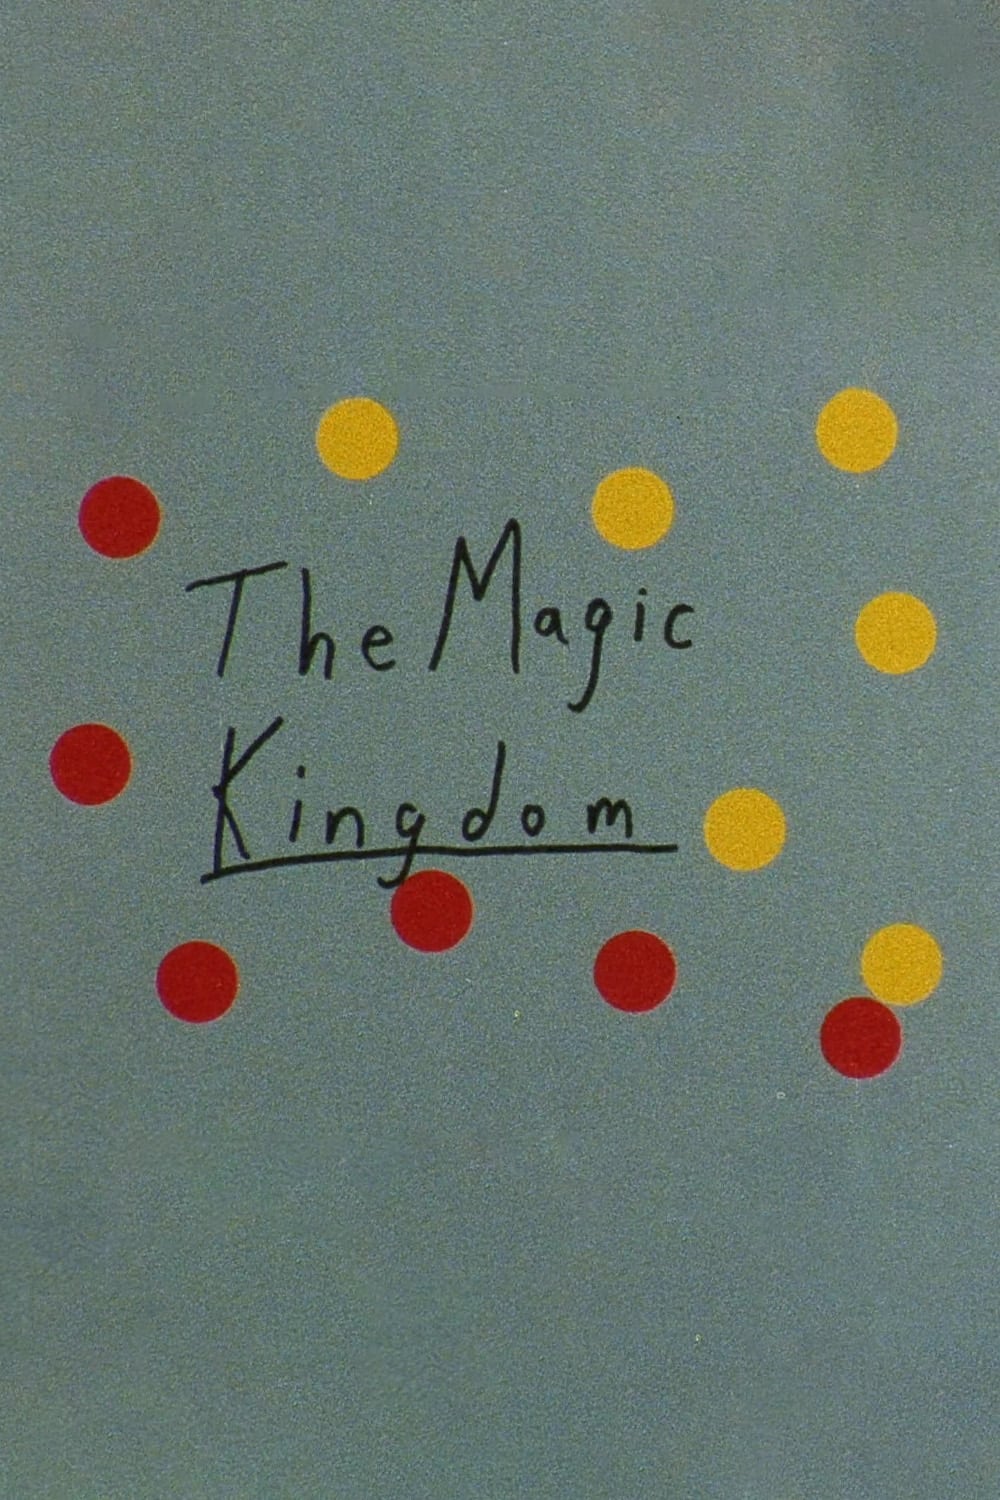 The Magic Kingdom